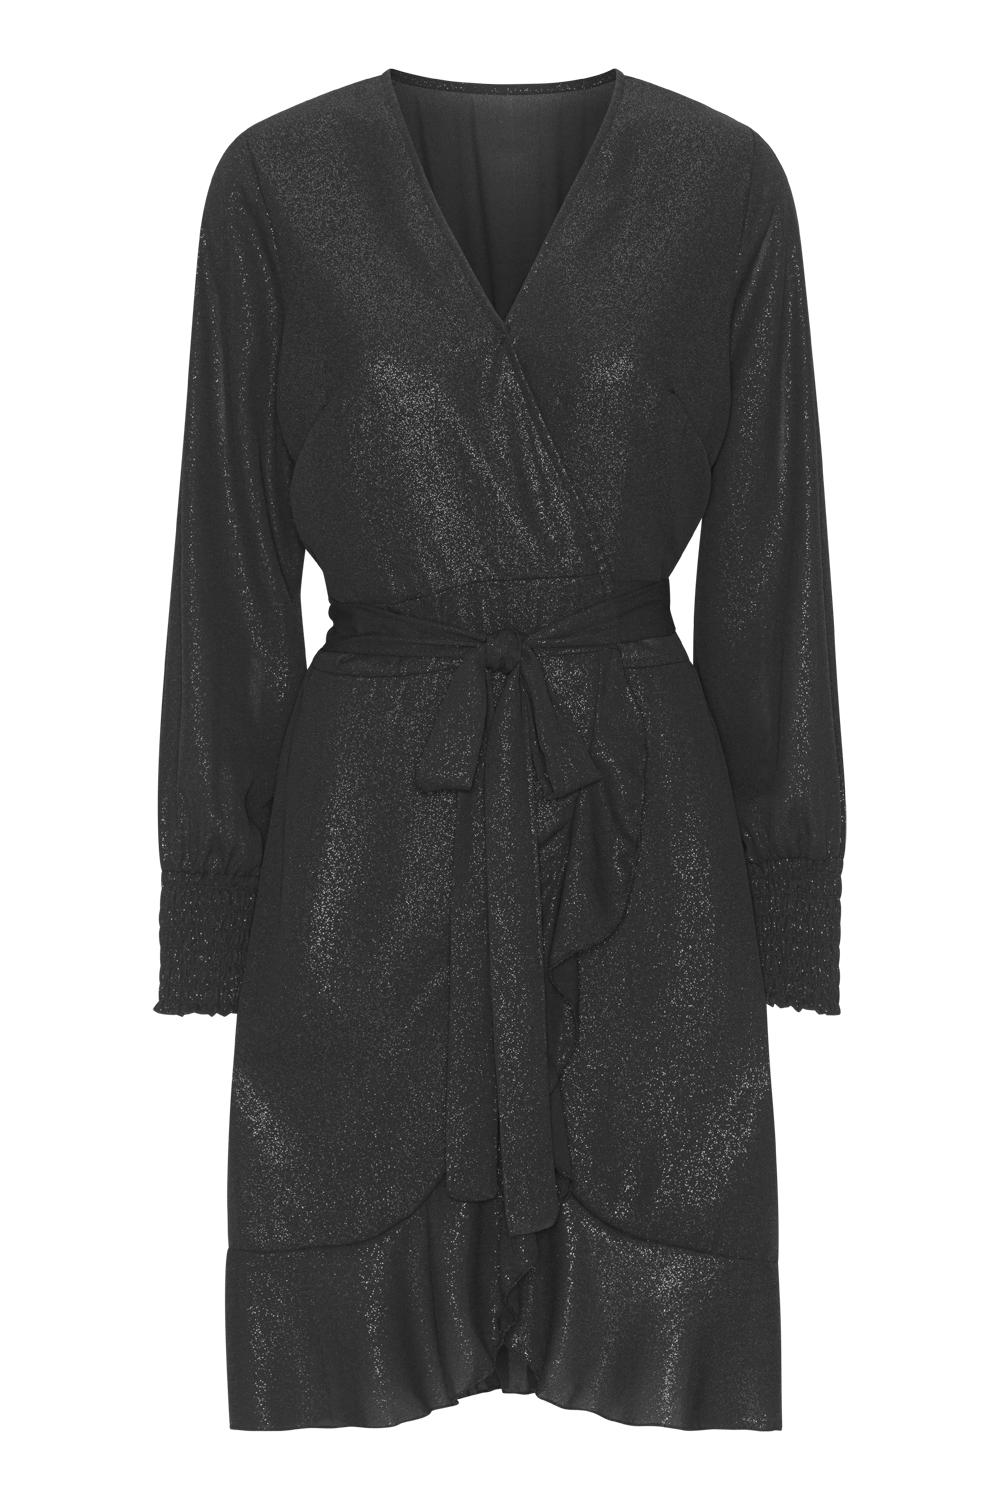 Milly LS Shimmer Wrap Dress Black